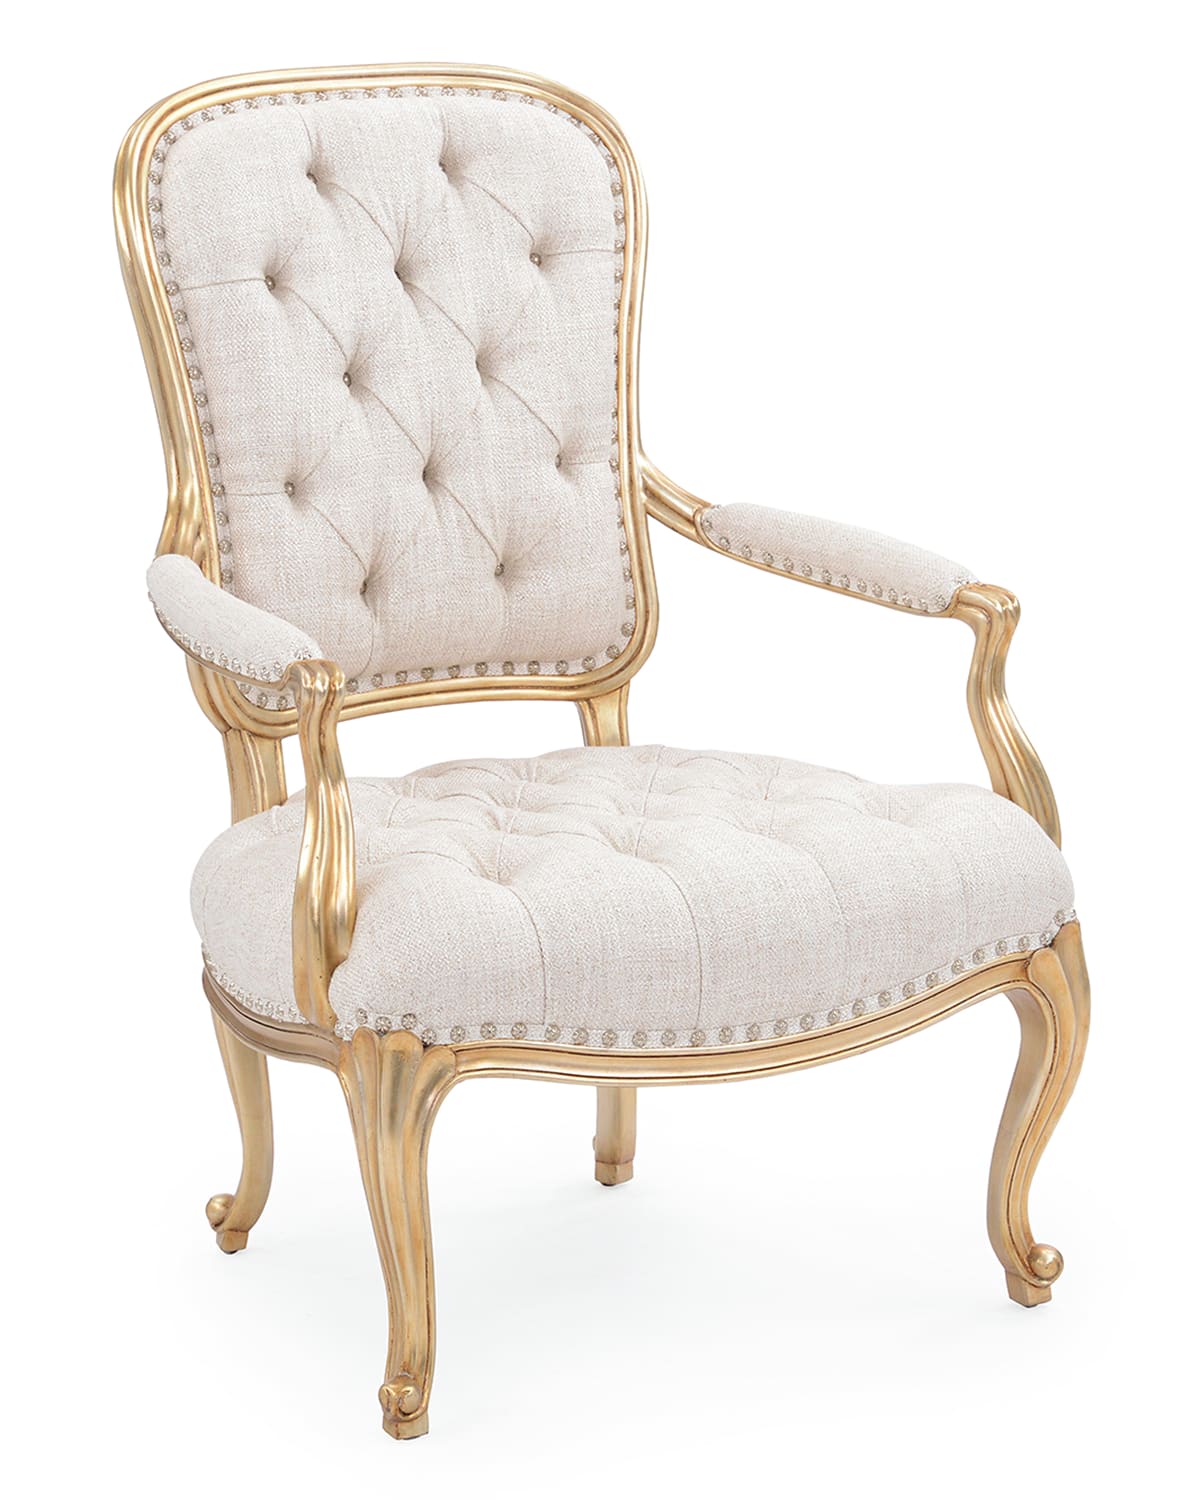 Shop John-richard Collection Trianon Chair